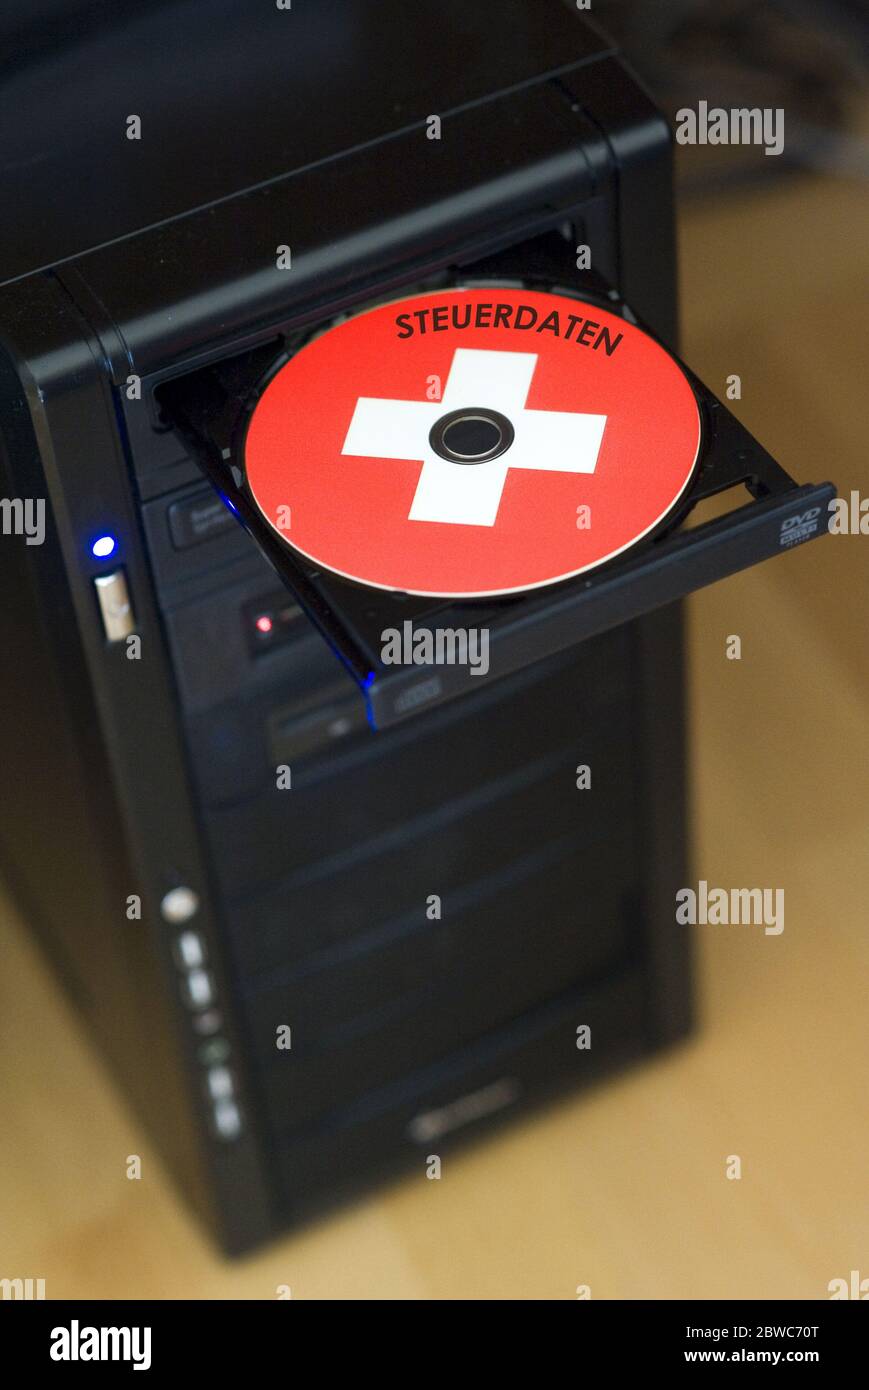 Schweizer Daten CD, Scharzgeld, anonyme Konten, Bankkunden, Foto Stock